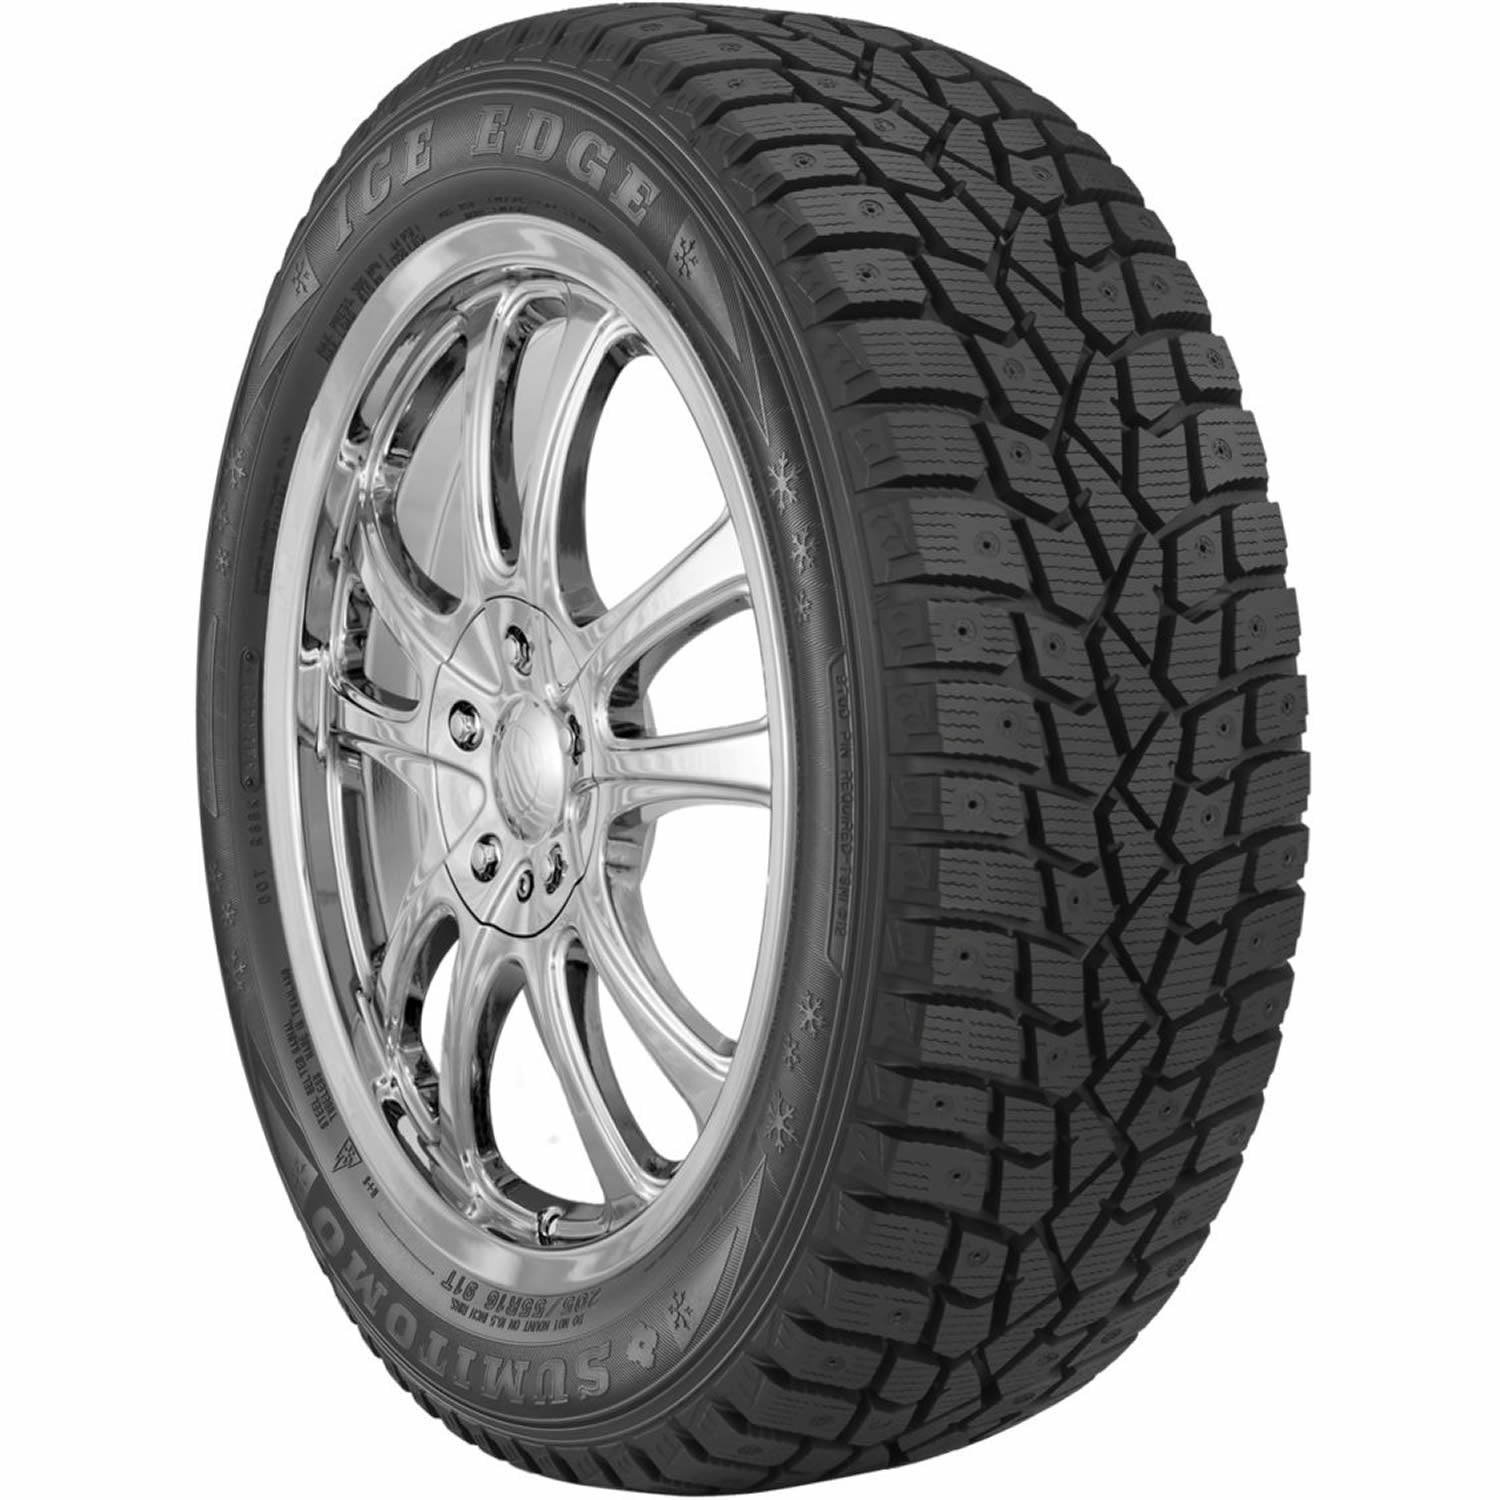 SUMITOMO ICE EDGE 225/60R18 (29X8.8R 18) Tires